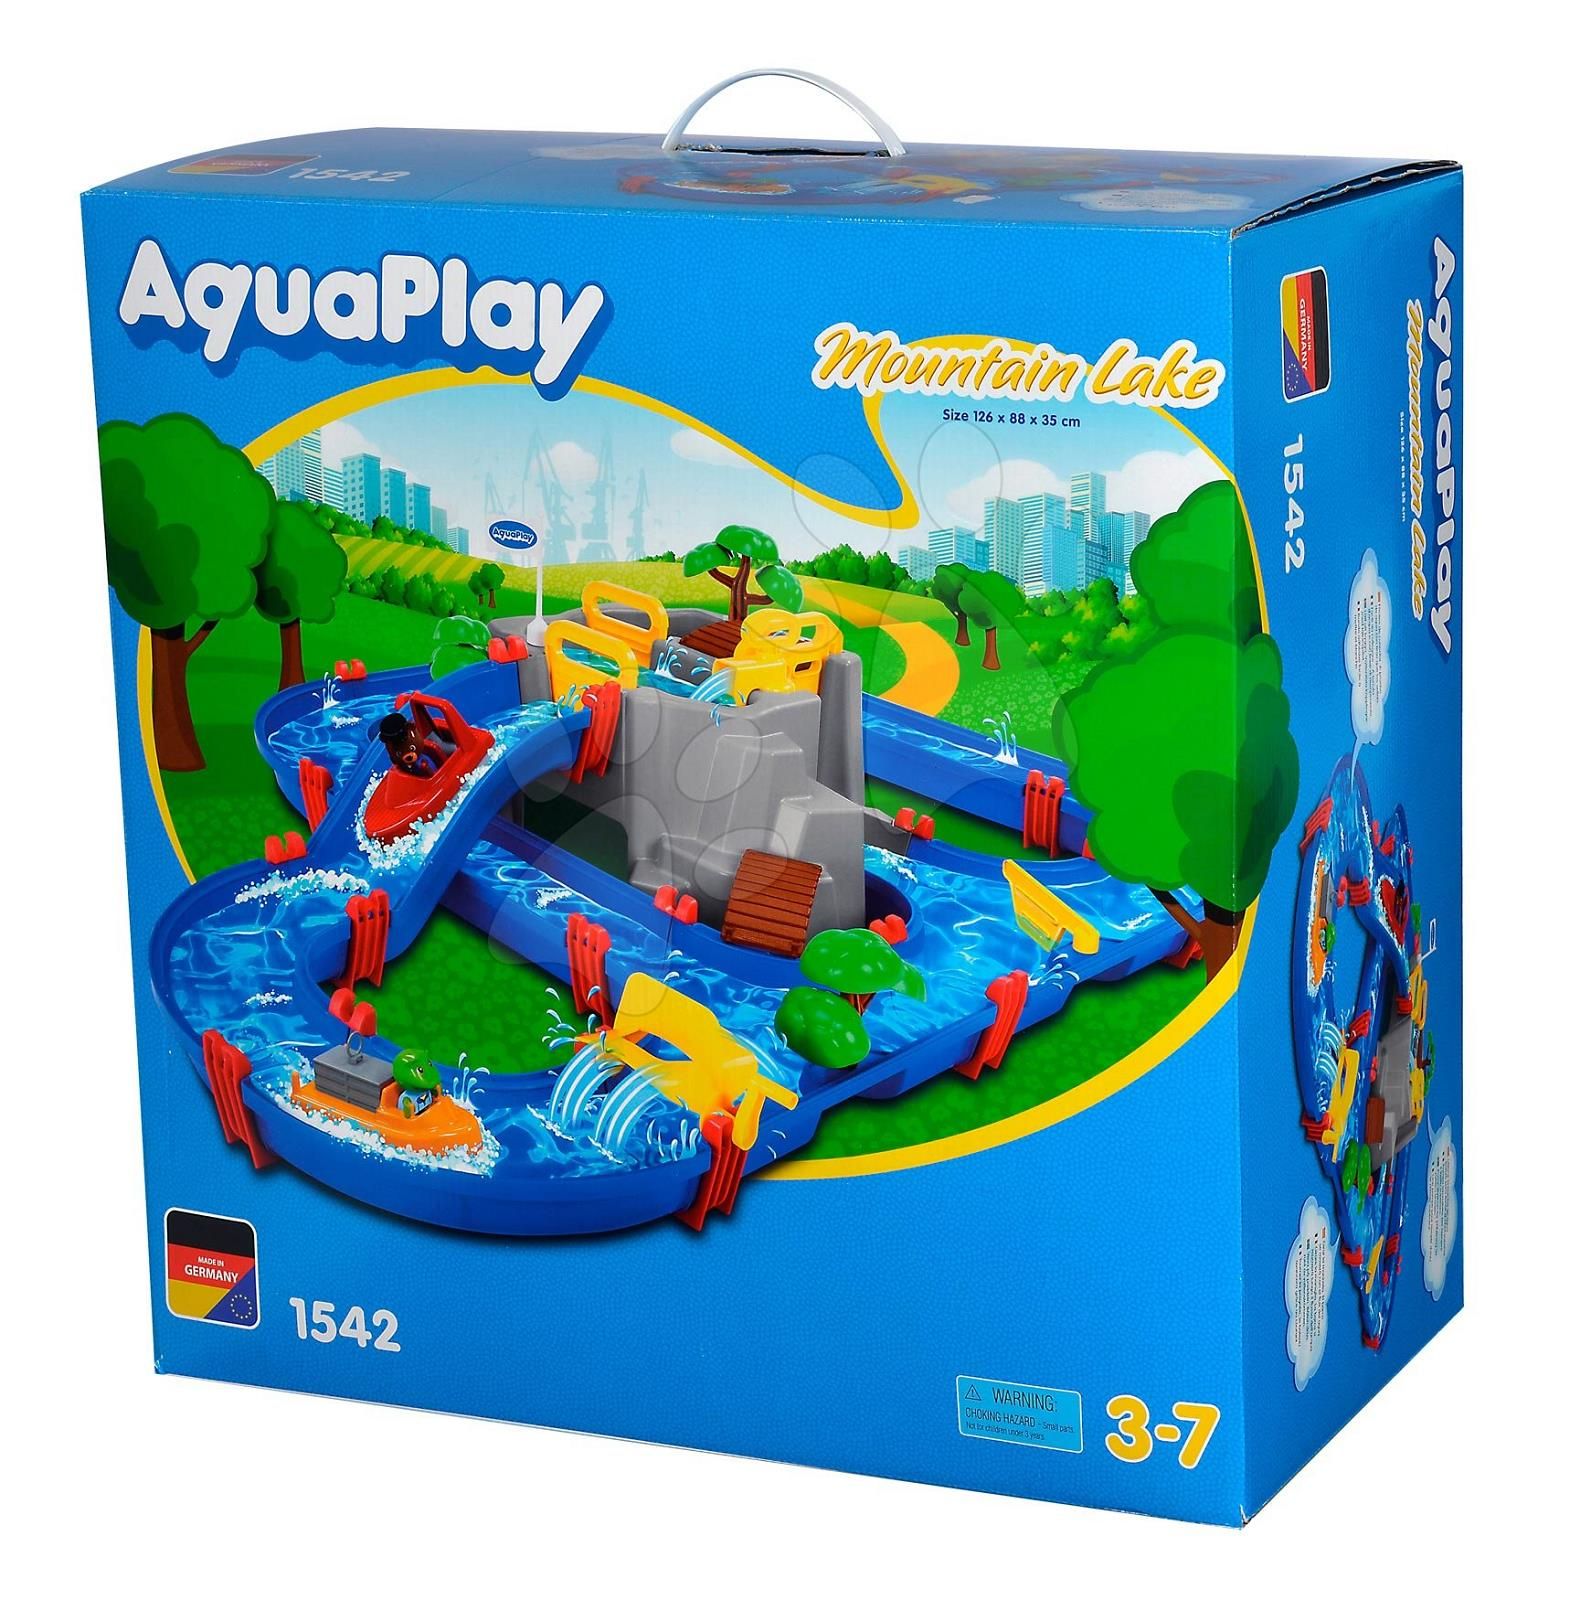 AquaPlay AquaPlay MountainLake 126x88cm, 70pcs (8700001542) - B-Toys